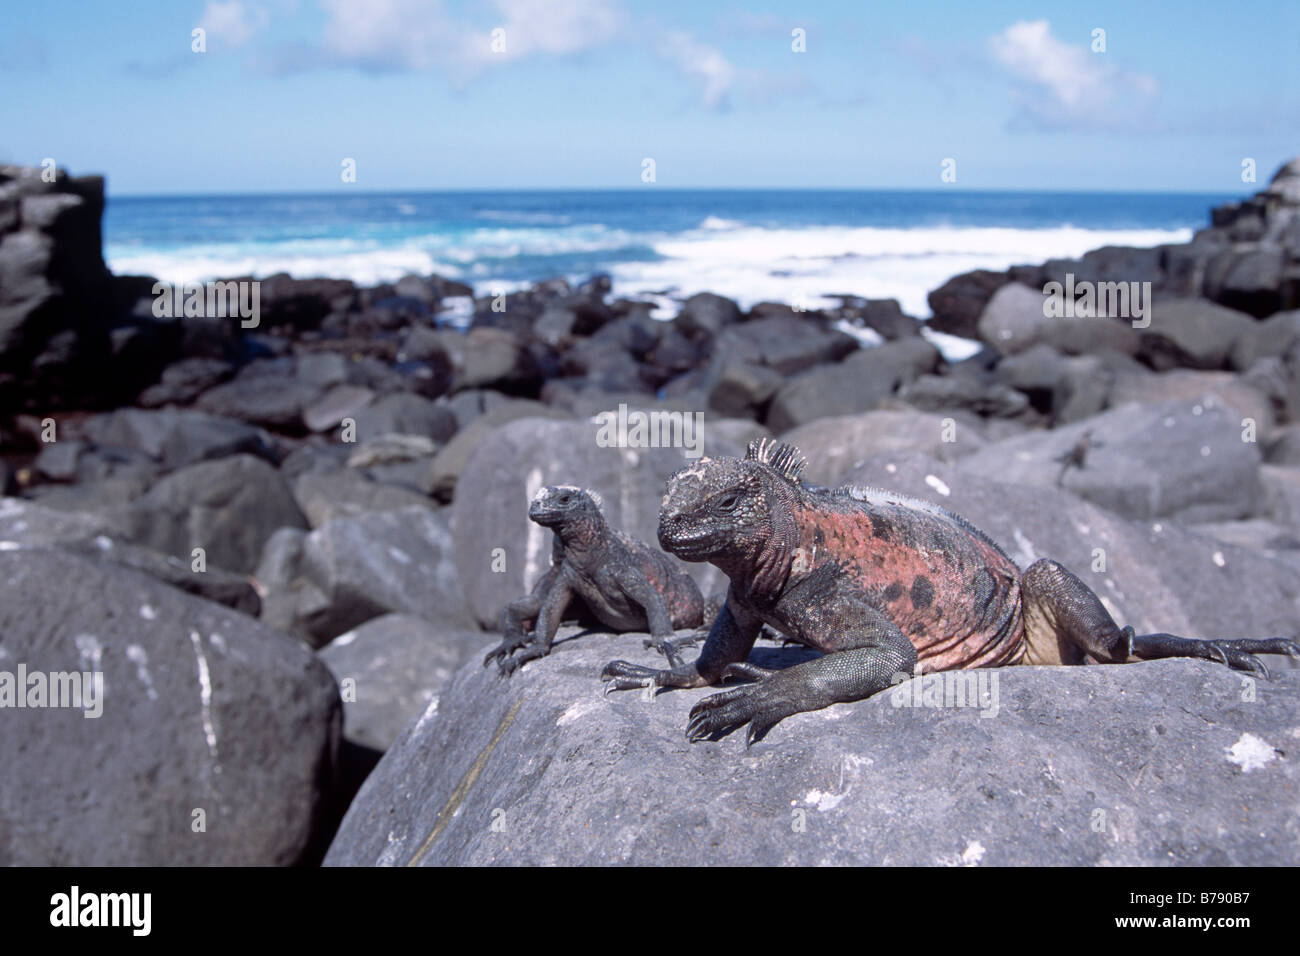 Red Marine Iguana's (Amblyrhynchus cristatus), sunbathing, Espanola Island, Galapagos Islands, Ecuador, South America Stock Photo